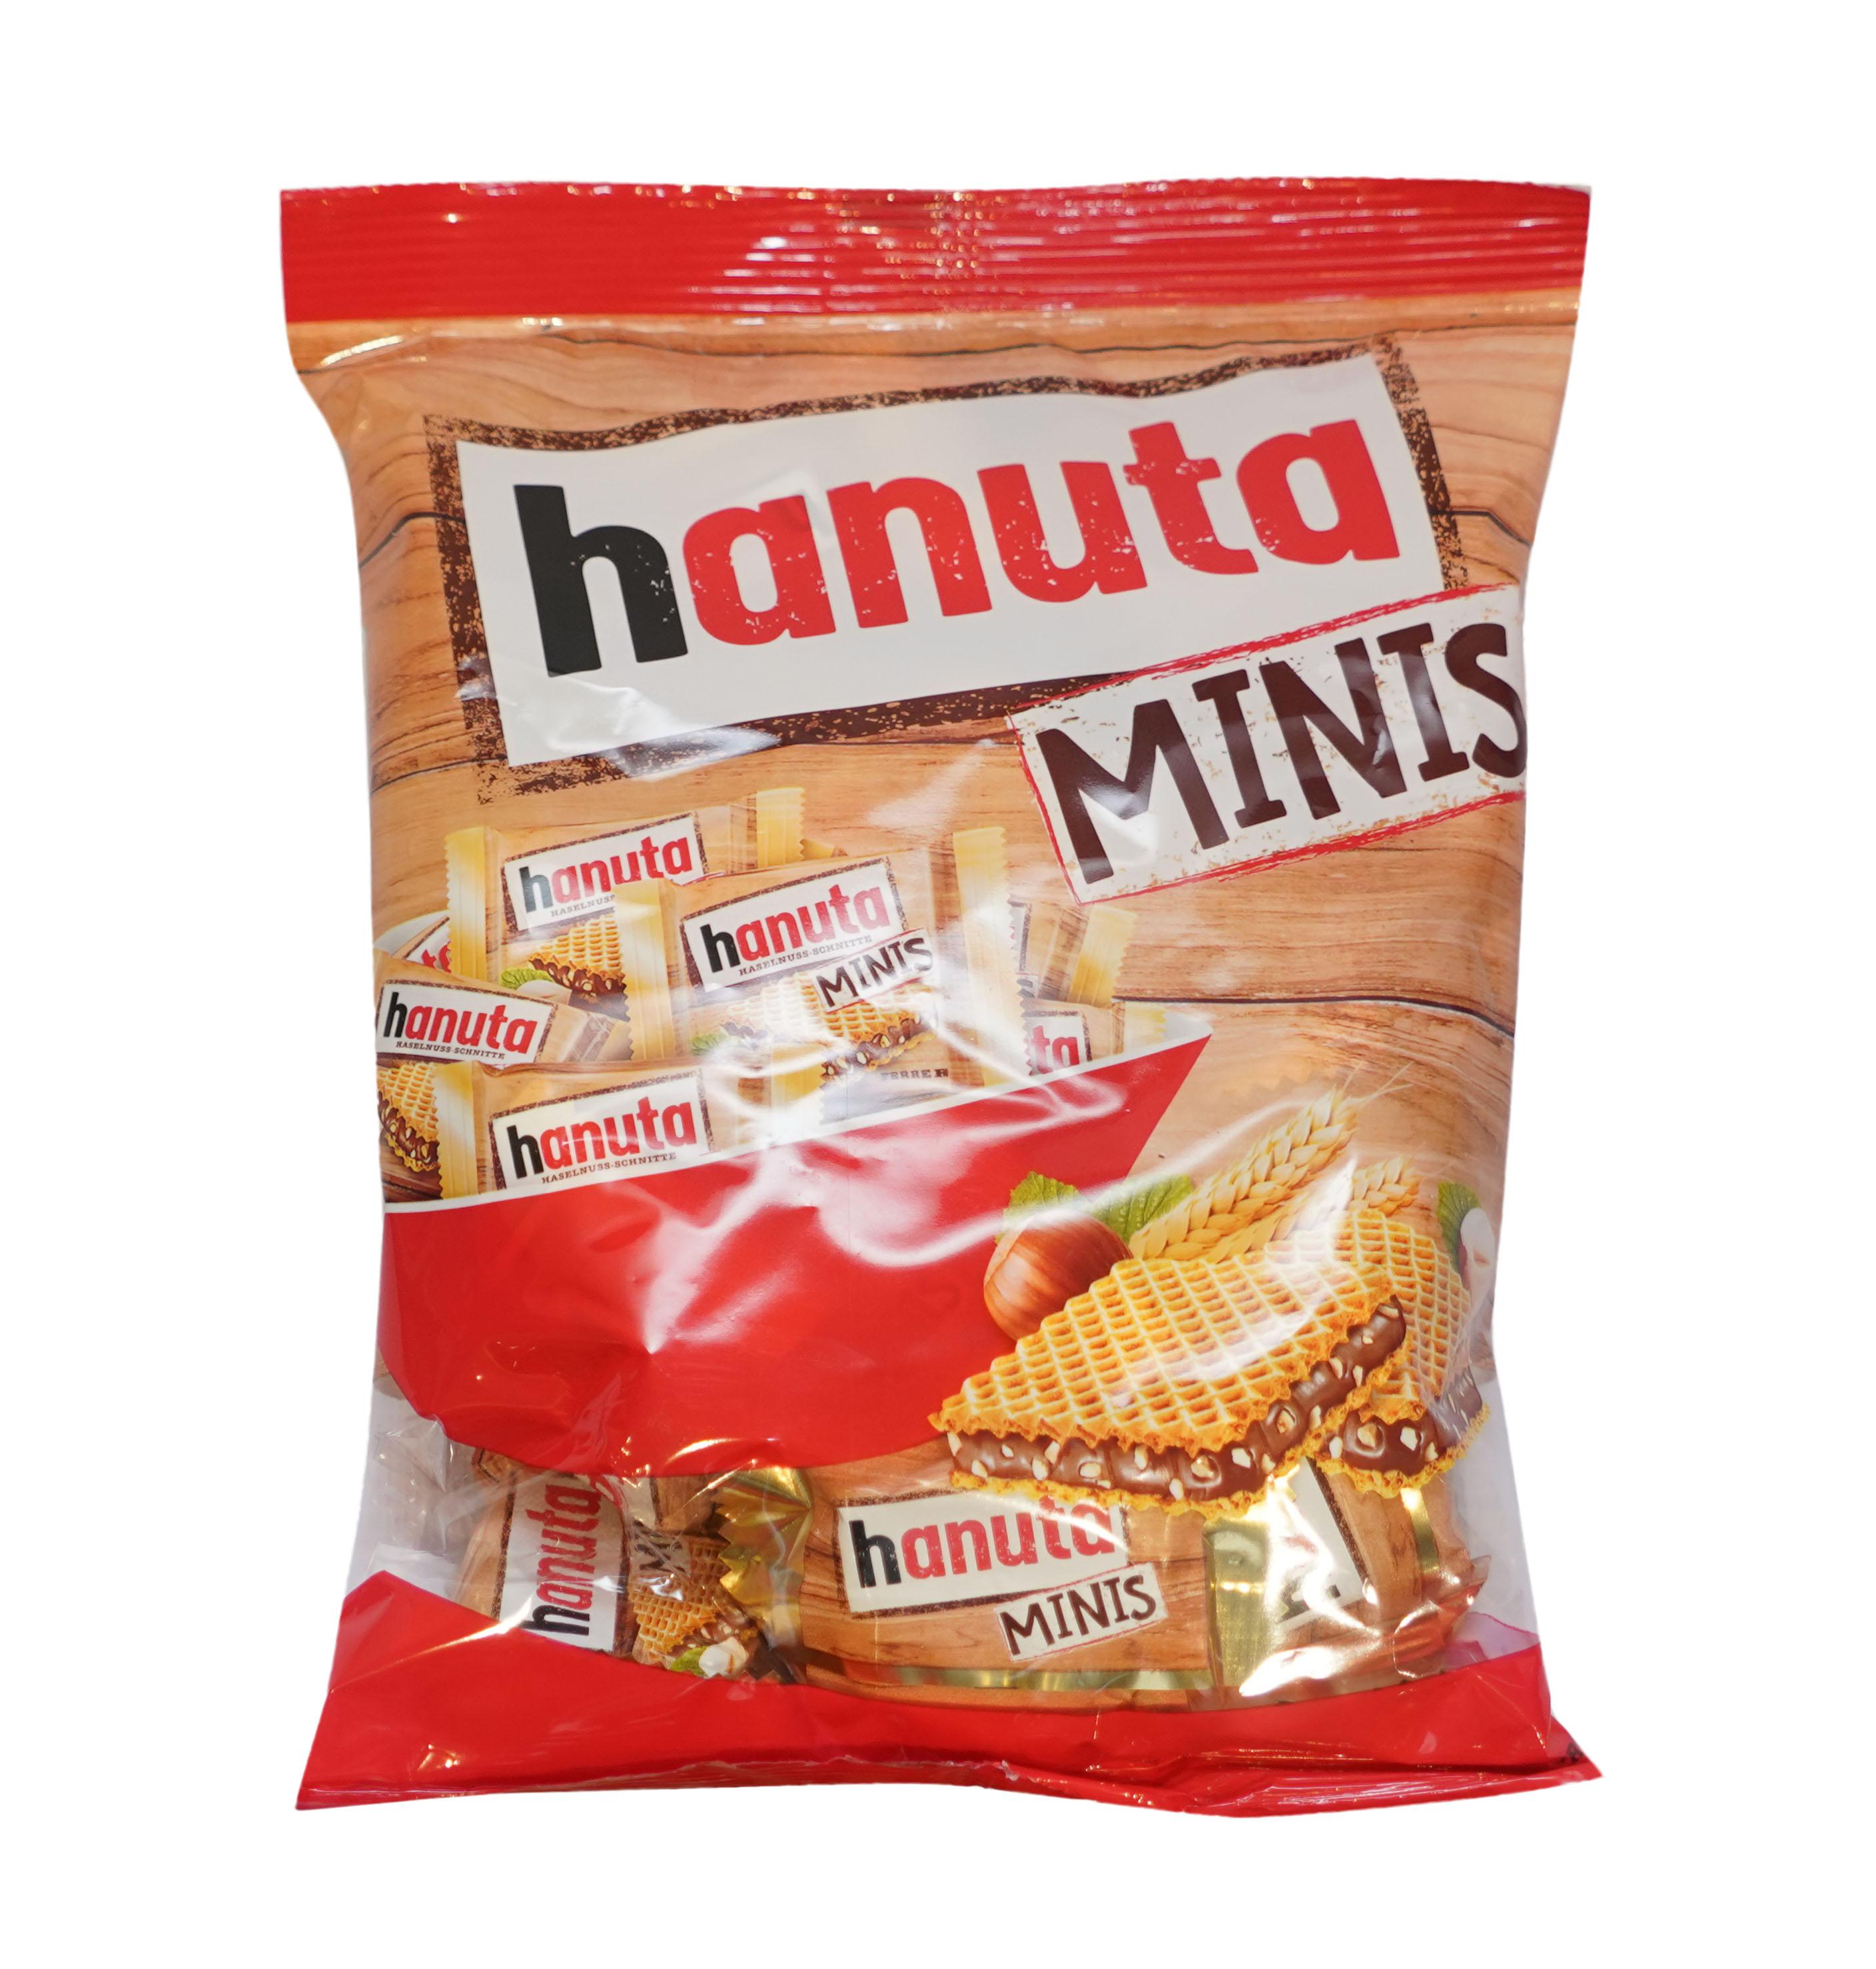 Ferrero Hanuta Haselnuss-Schnitte Minis (18 pcs, 200g)